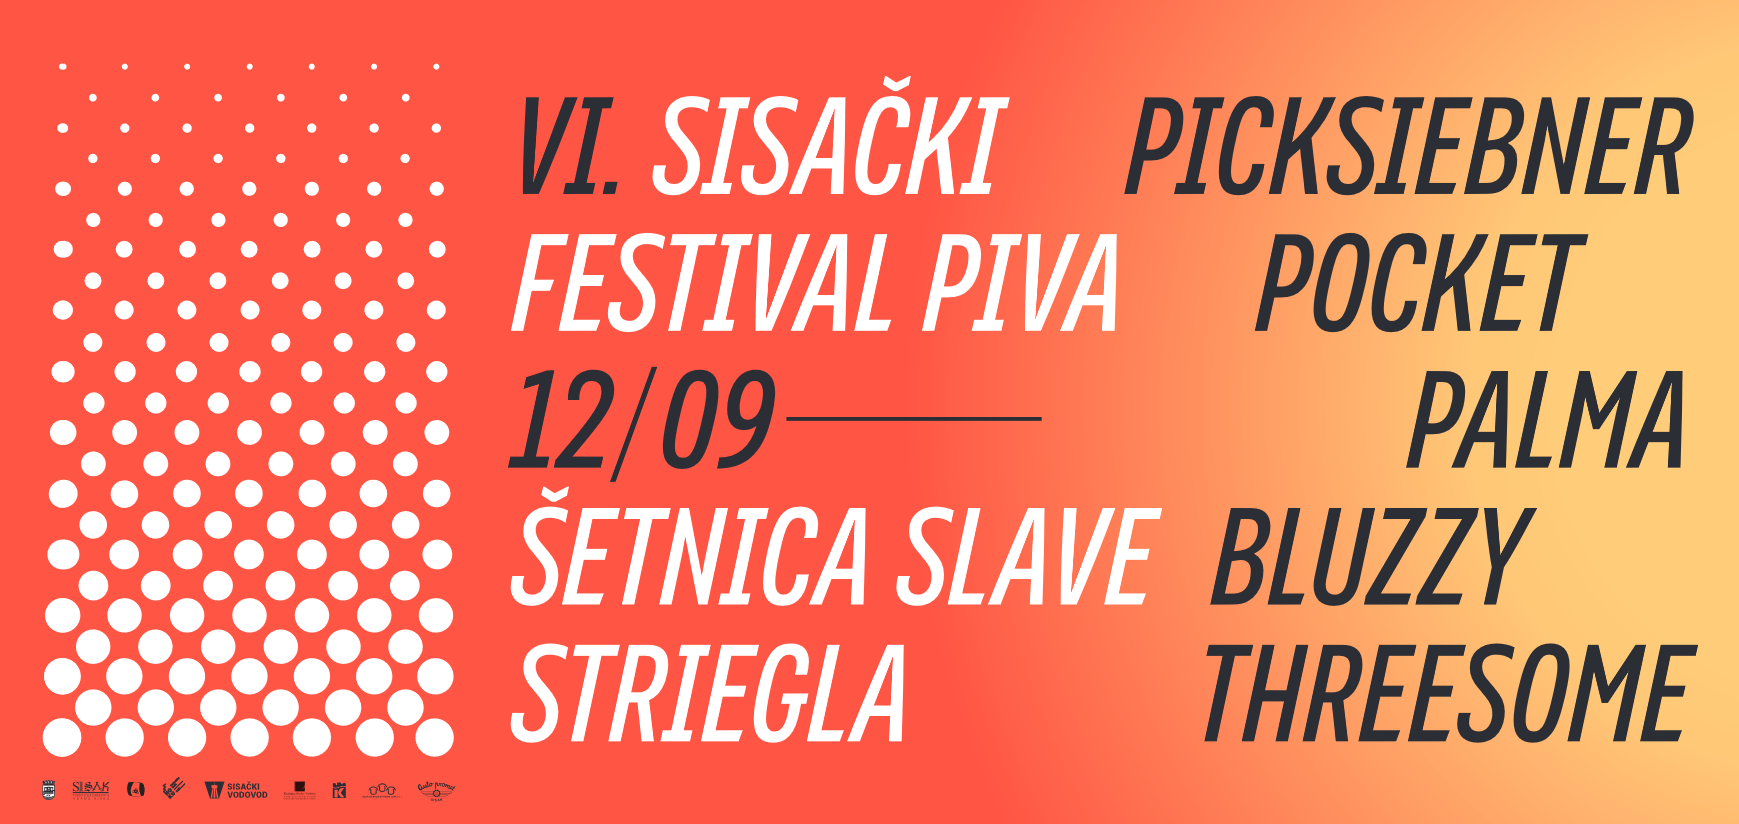 You are currently viewing Sisački festival piva uz Bluzzy Threesome, Picksiebner i Pocket Palma